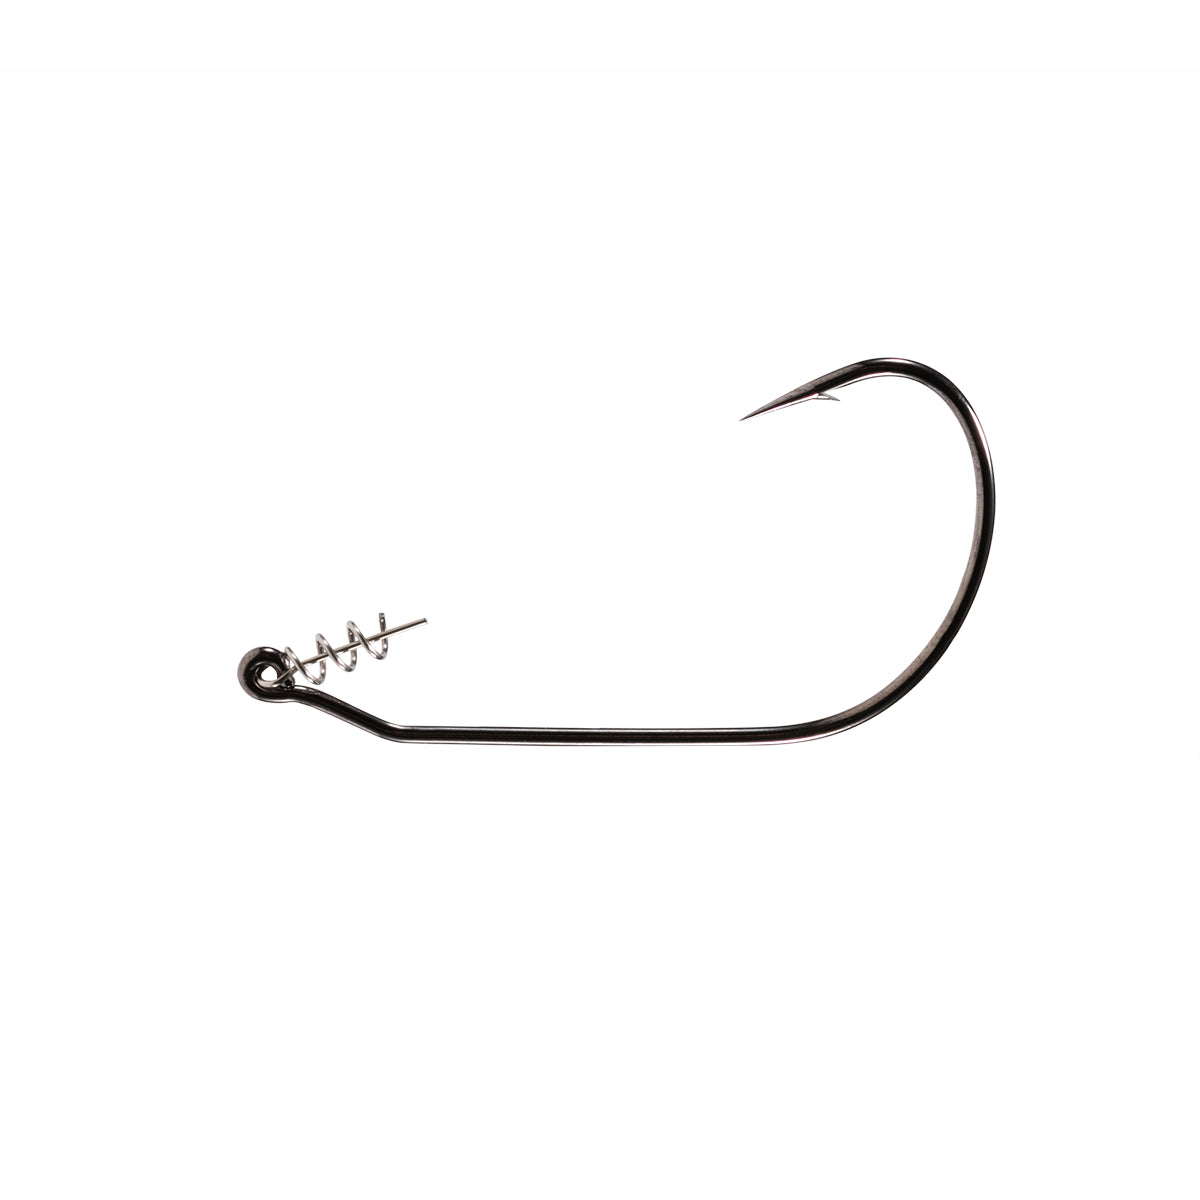 Swimbait Hook with Screwlock Keeper | 3 Pack, #1/0